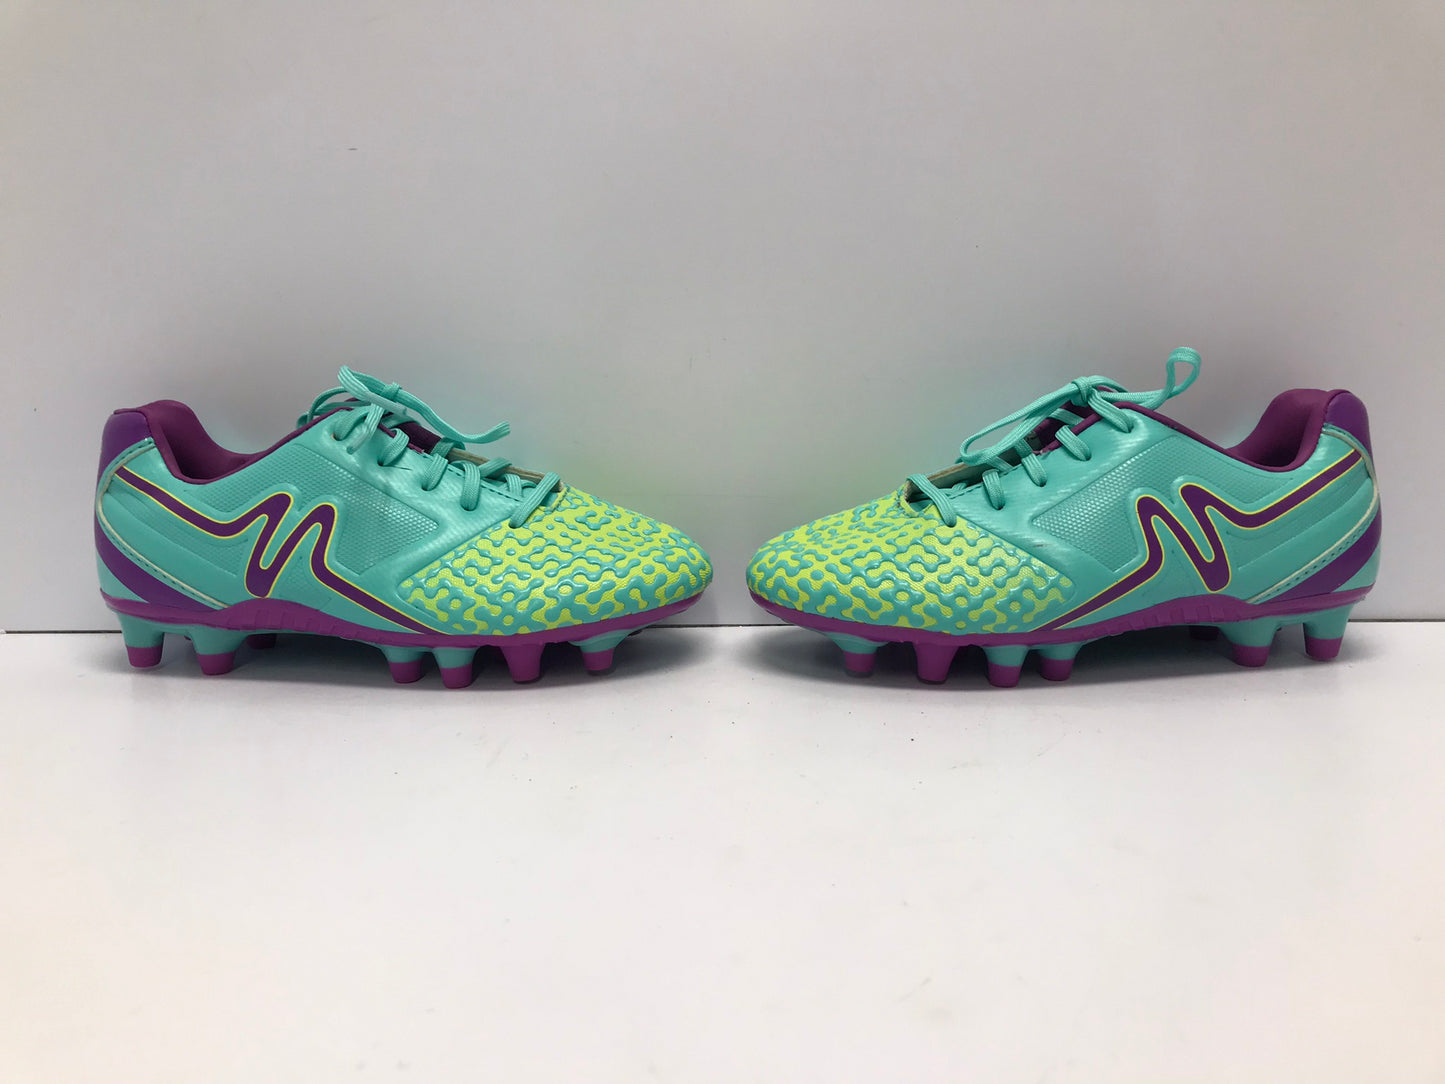 Soccer Shoes Cleats Child Size 1 Mitre Aqua Blue Lime Purple New Demo Model